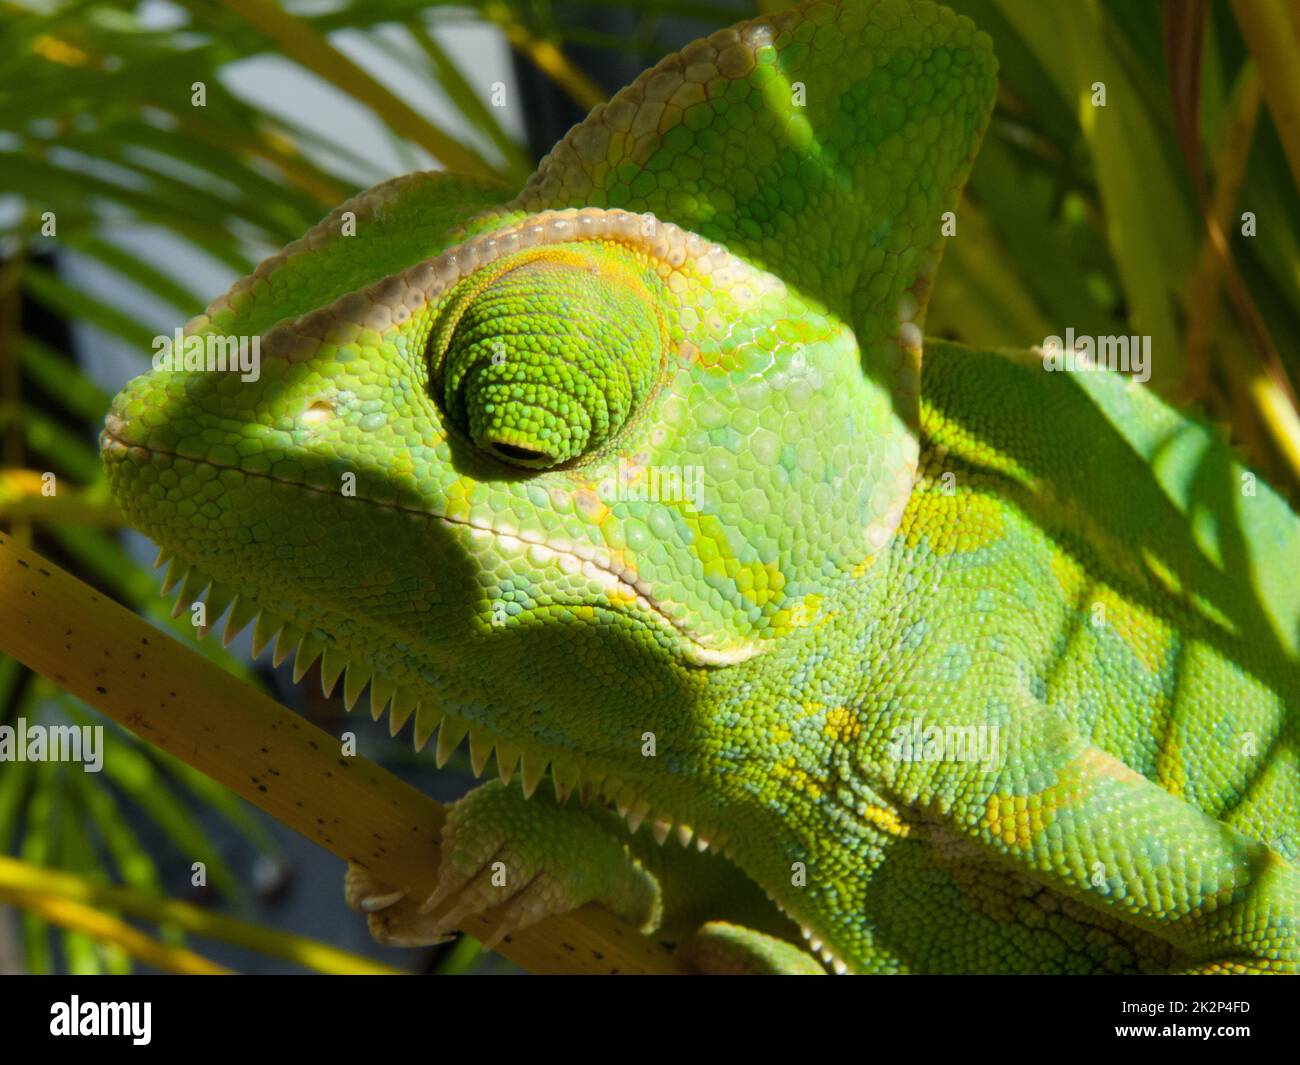 Chameleon head. Sitting in Bamboo. Stock Photo